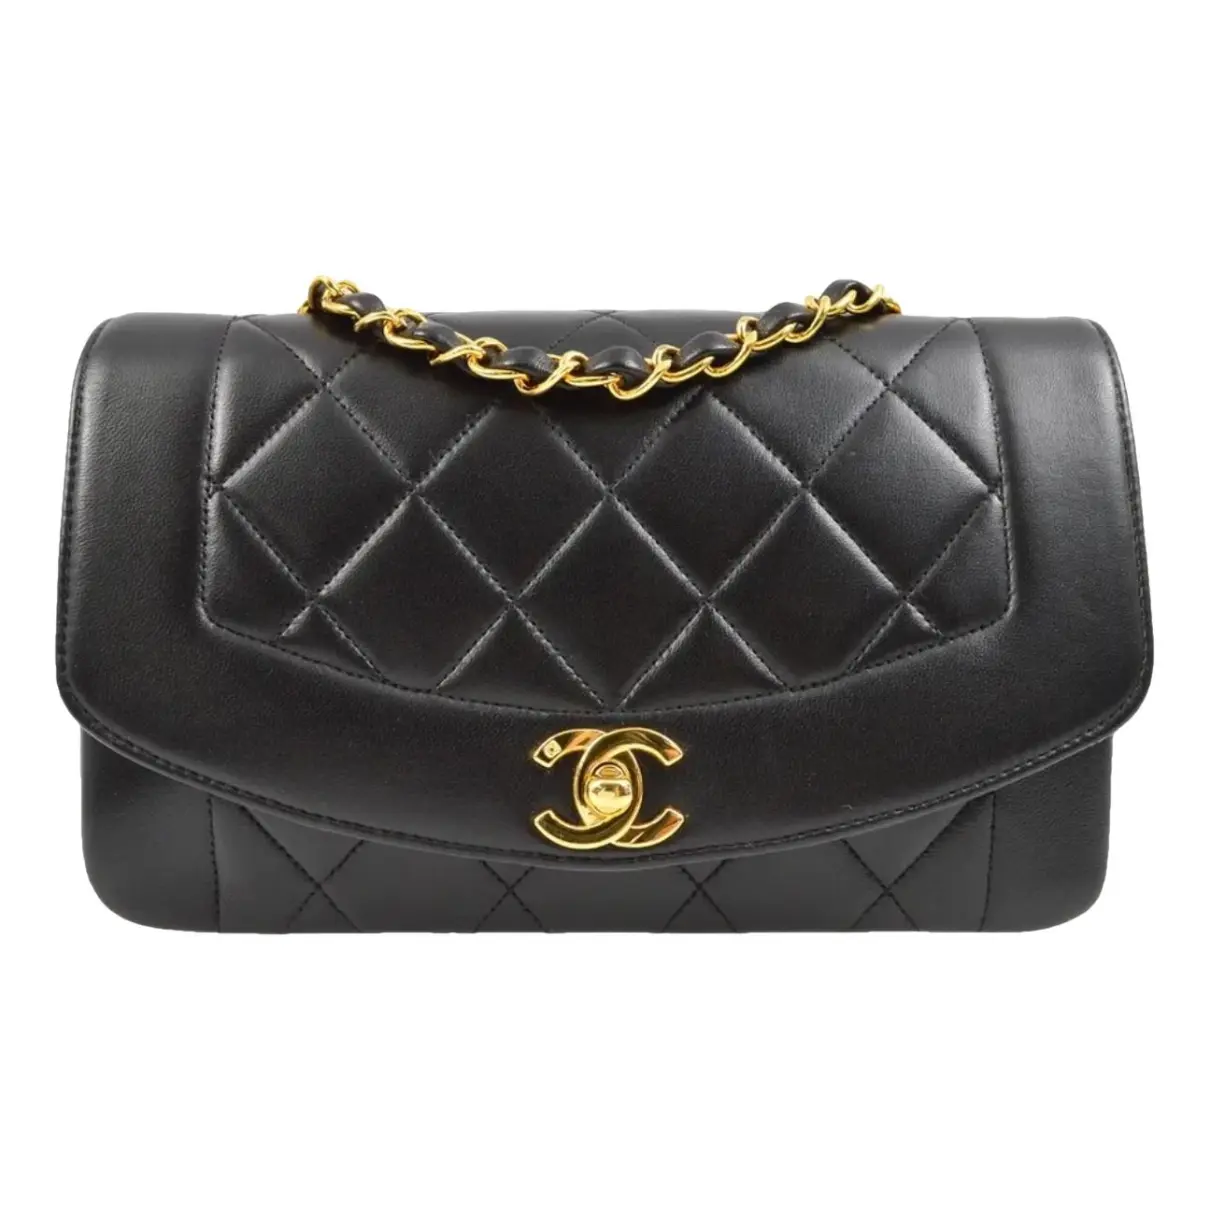 Diana leather crossbody bag Chanel - Vintage